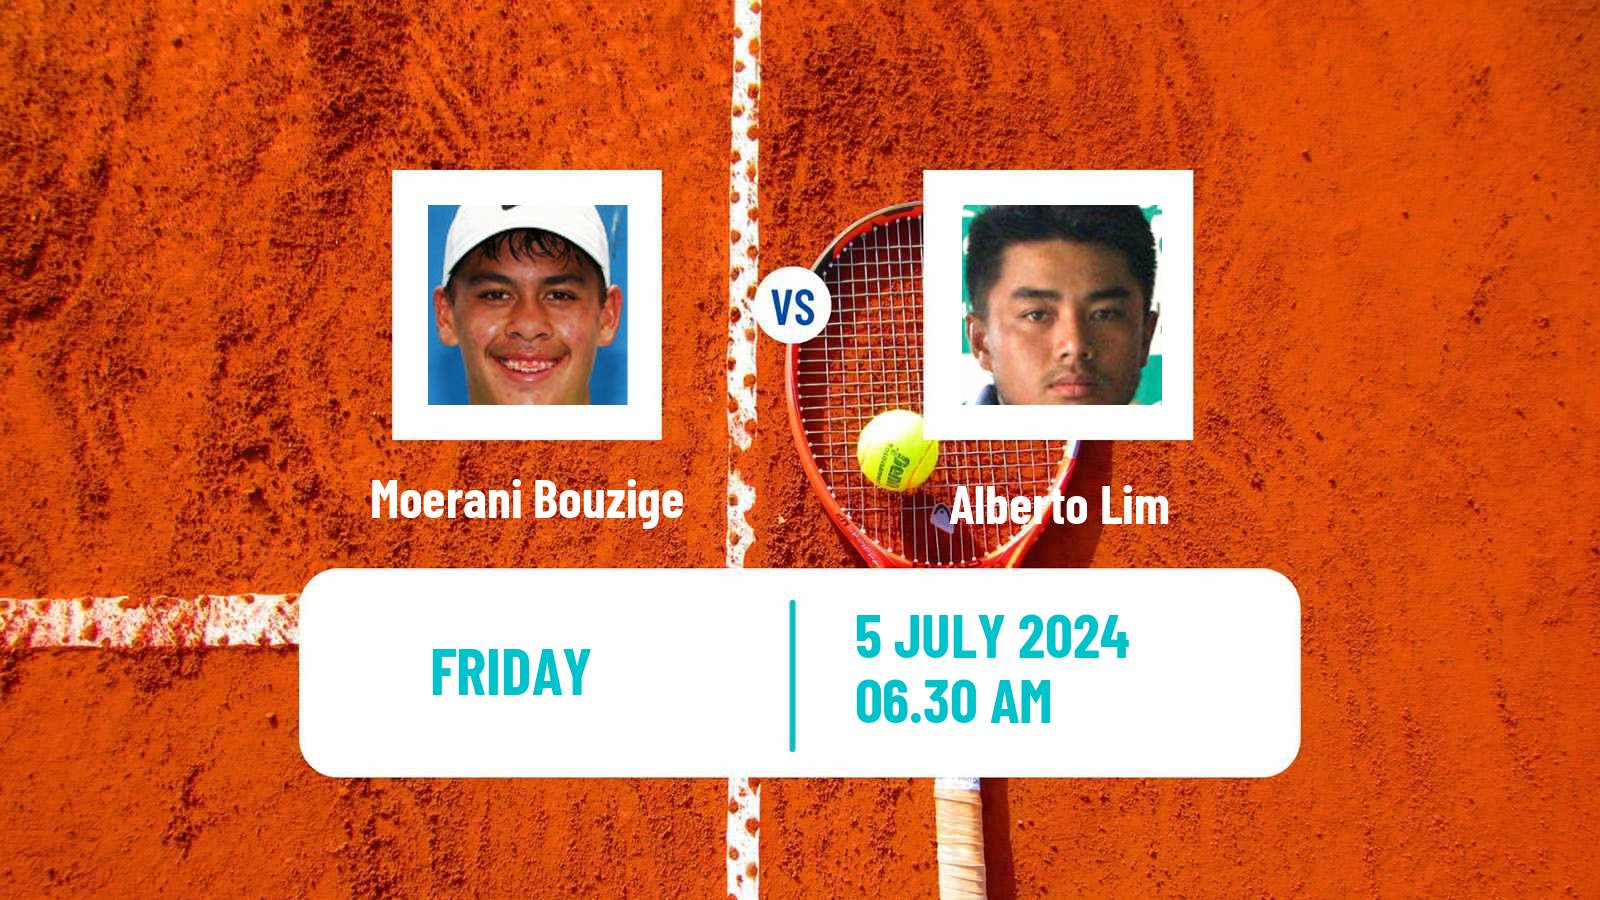 Tennis ITF M15 Tianjin 2 Men Moerani Bouzige - Alberto Lim